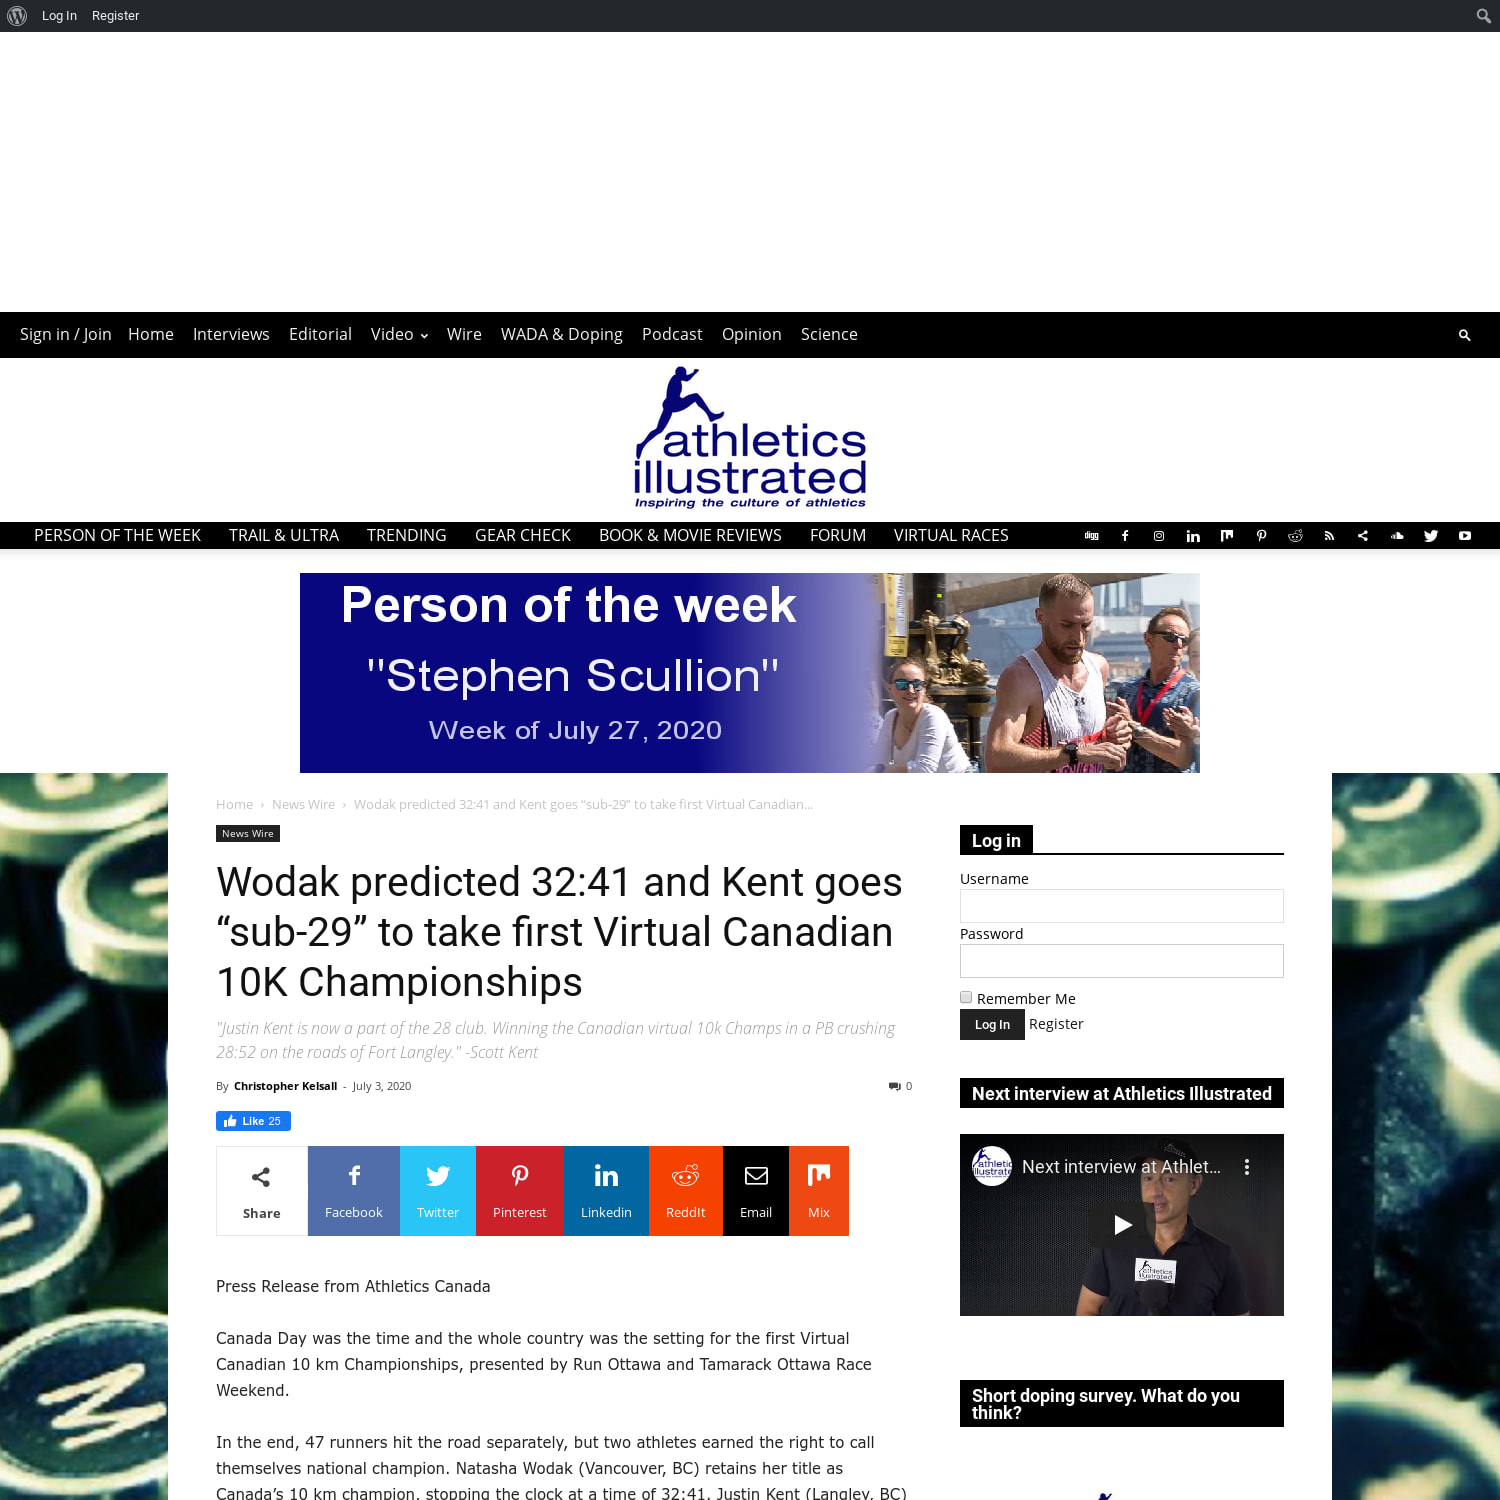 Natasha Wodak and Justin Kent win first ever Canada Day Virtual 10K